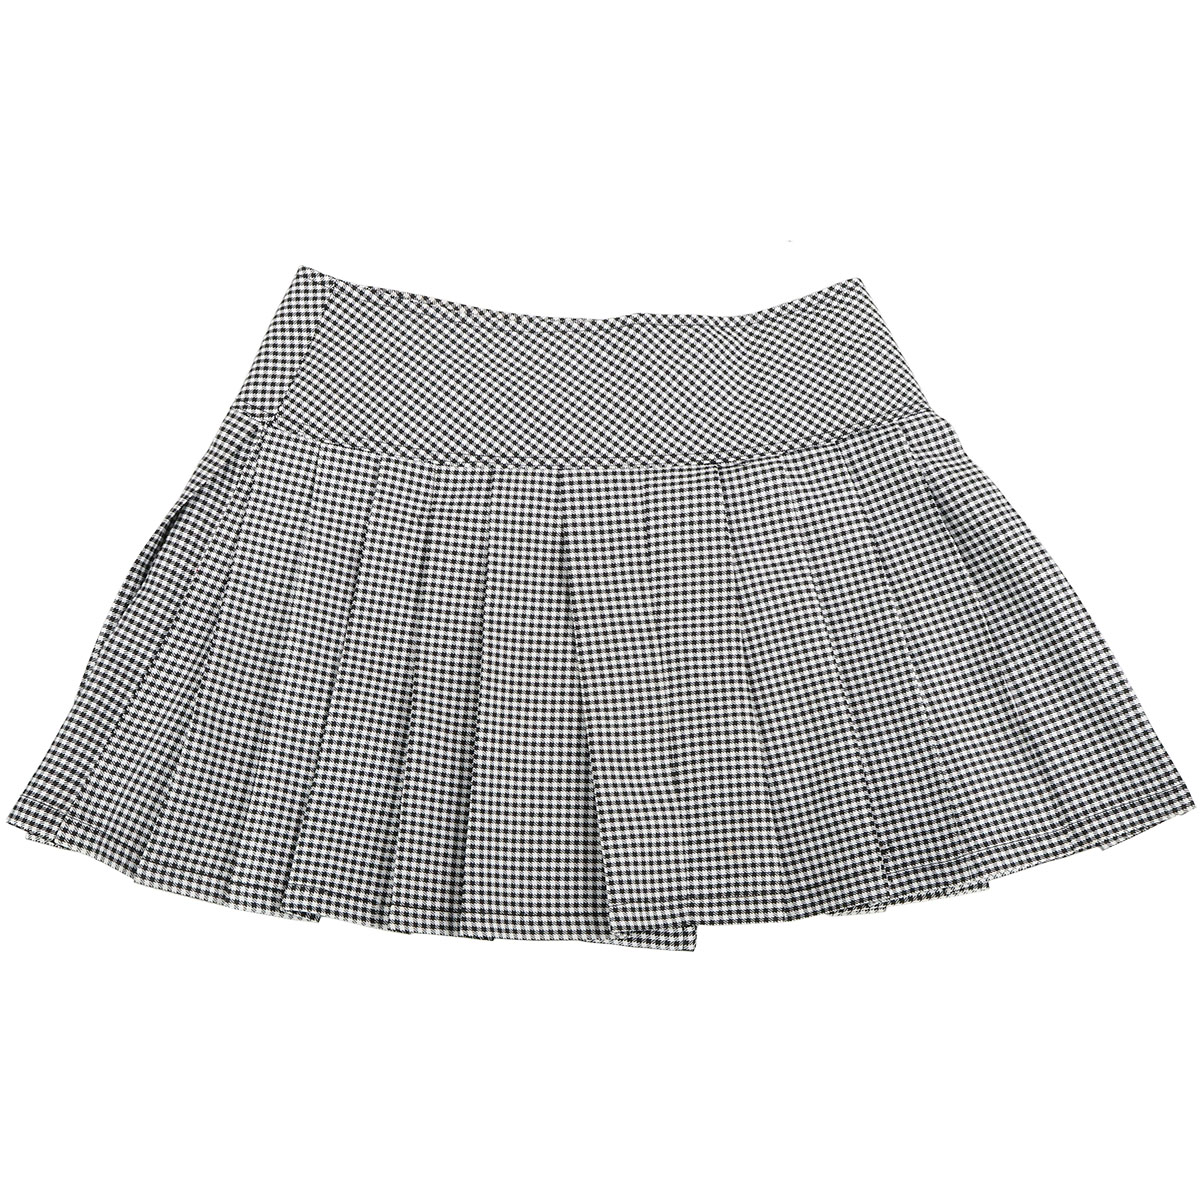 Burns Check Homespun Billie-Style Kilted Mini-Skirt - 32W 16L